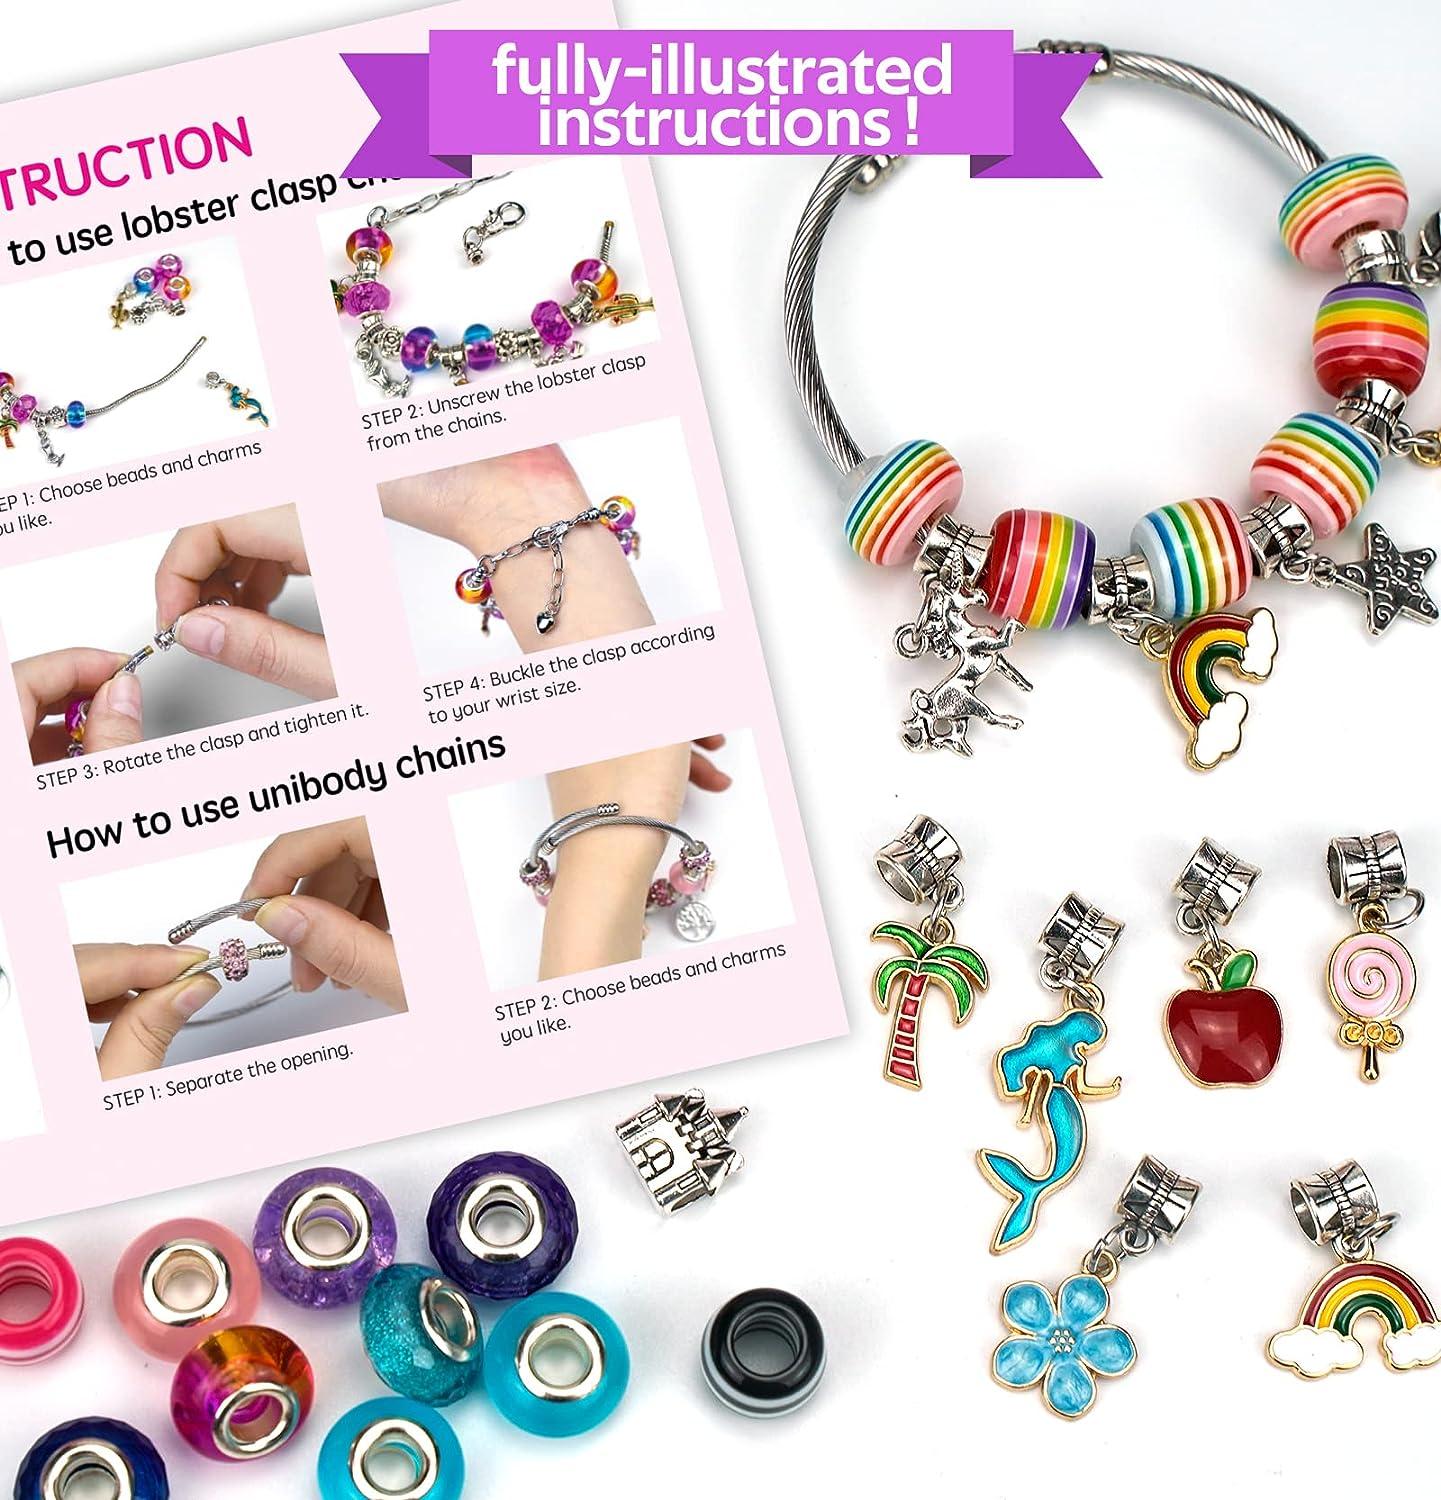 Charm Bracelet Making Kit Gionlion 150 Pcs Jewelry Making Supplies